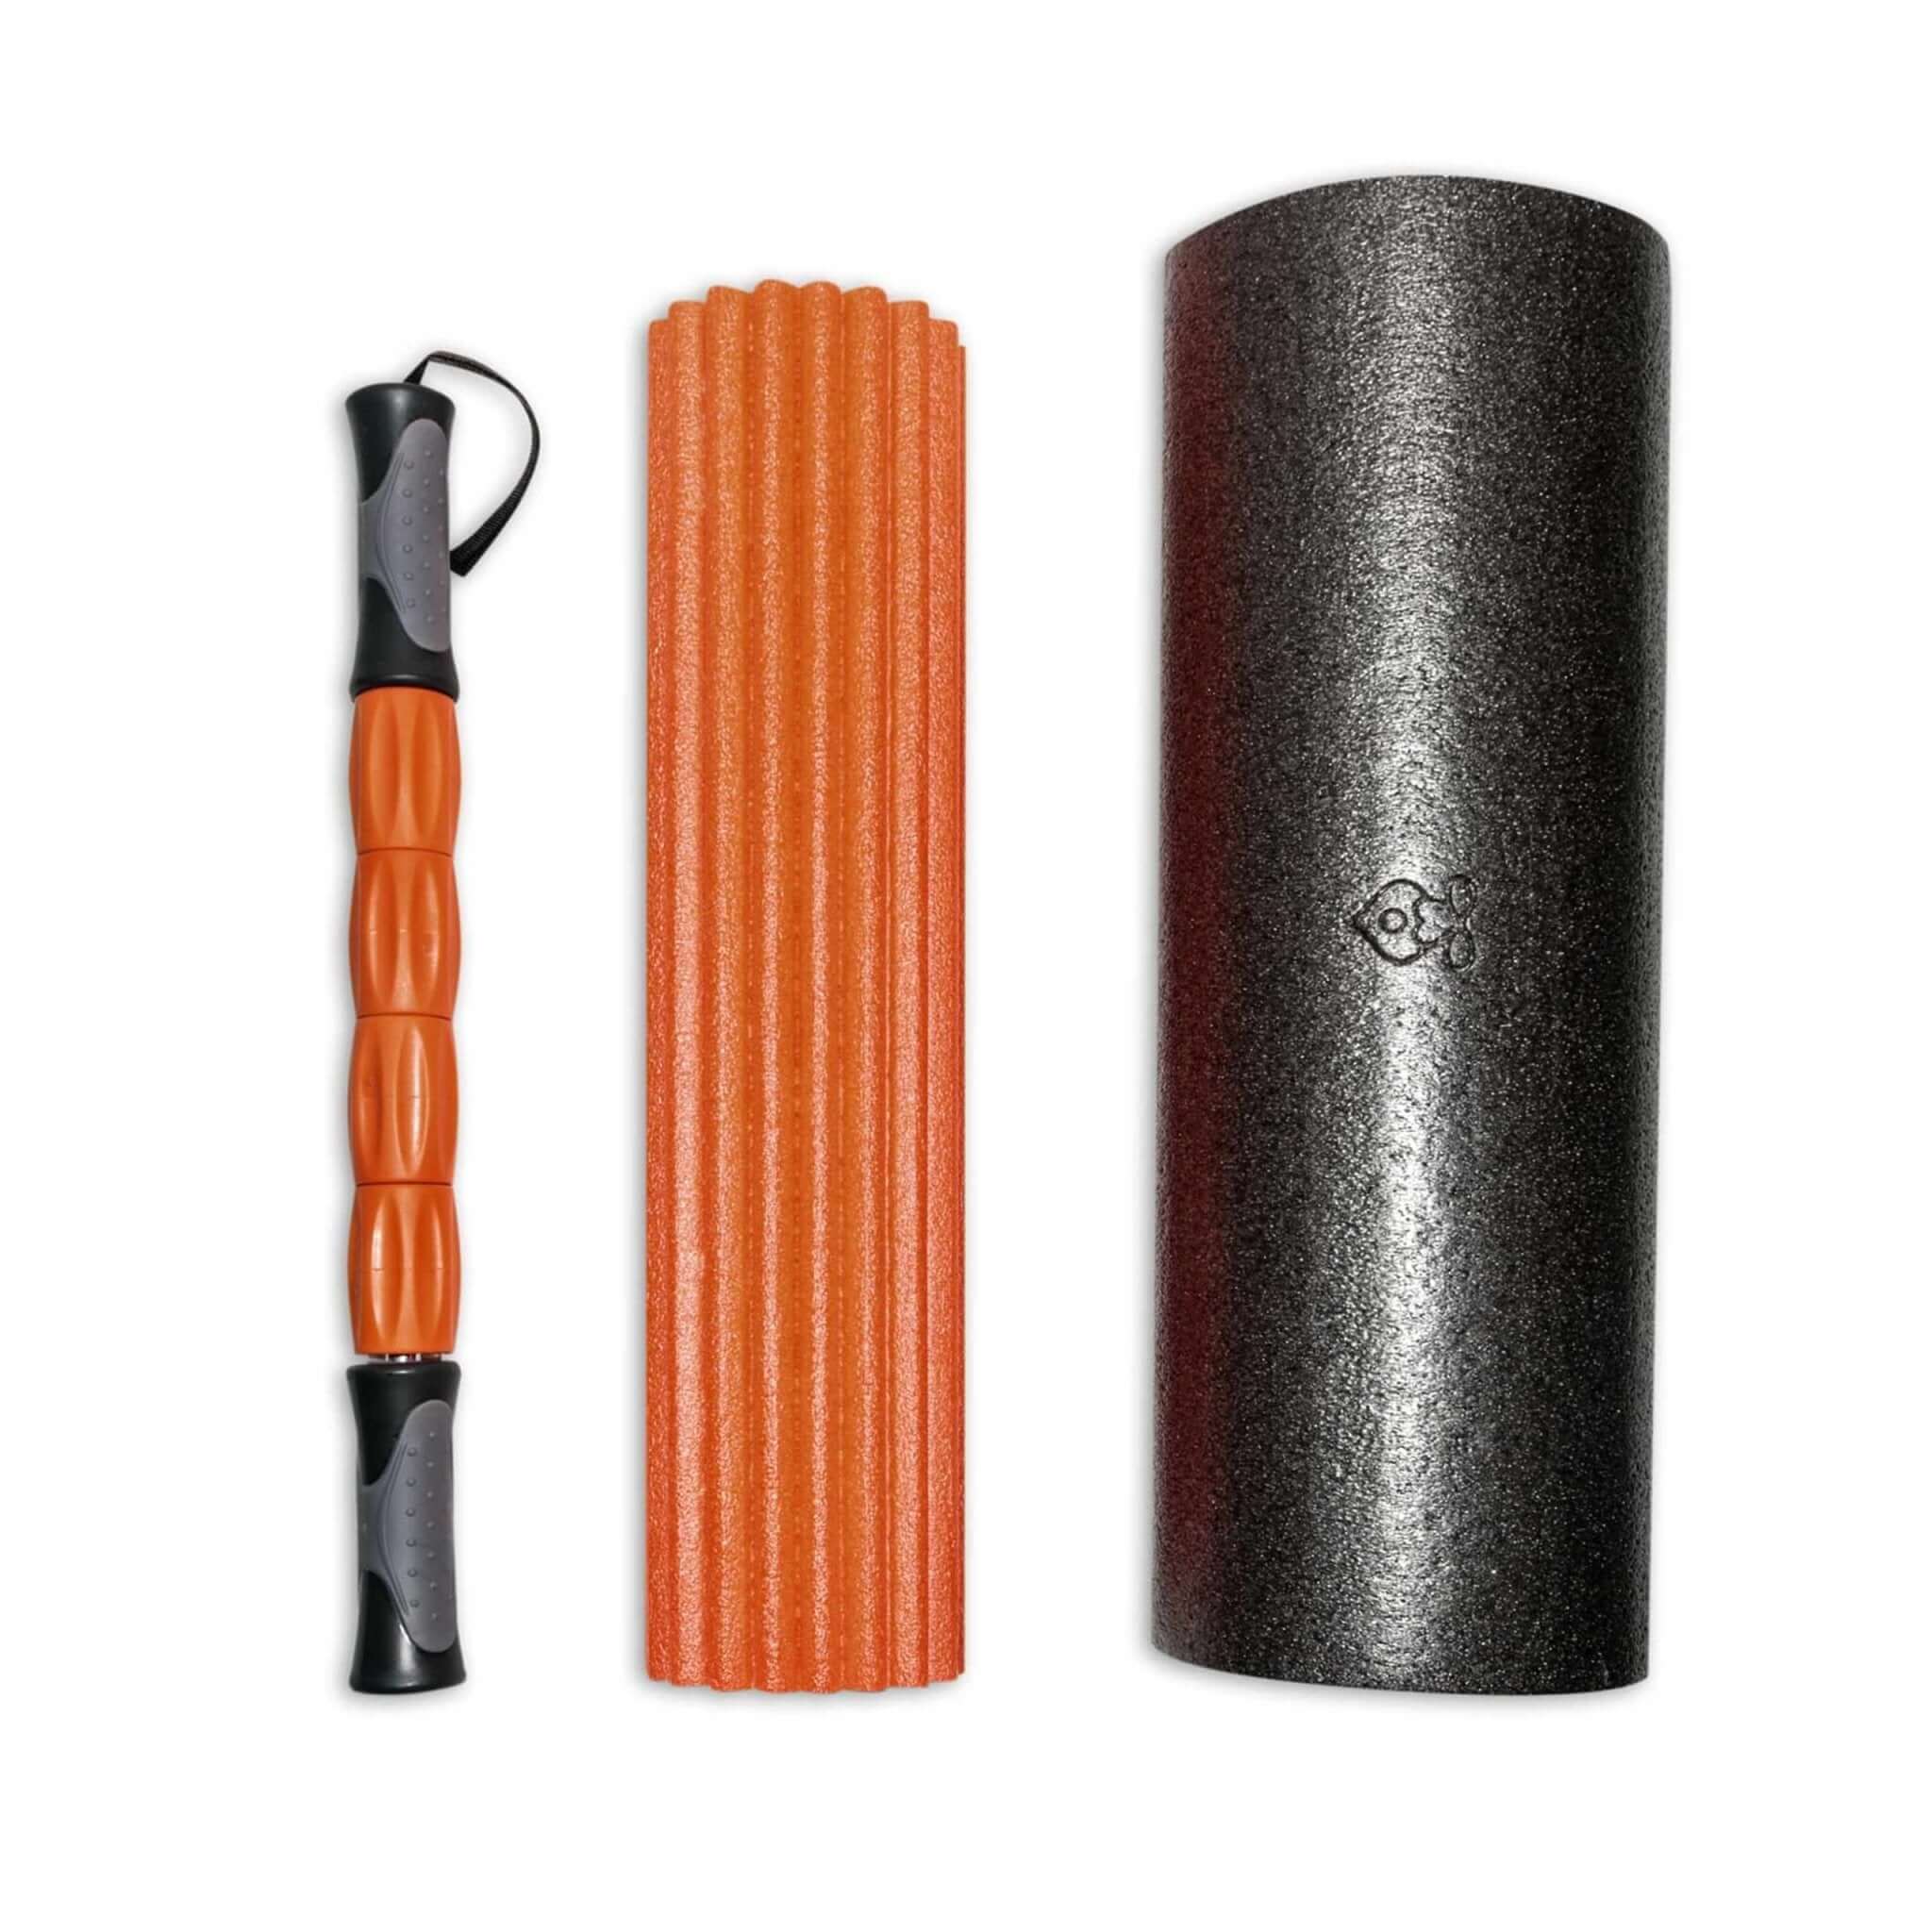 KEFL 3 in 1 Foam Roller, Orange-Black - KEFLUK